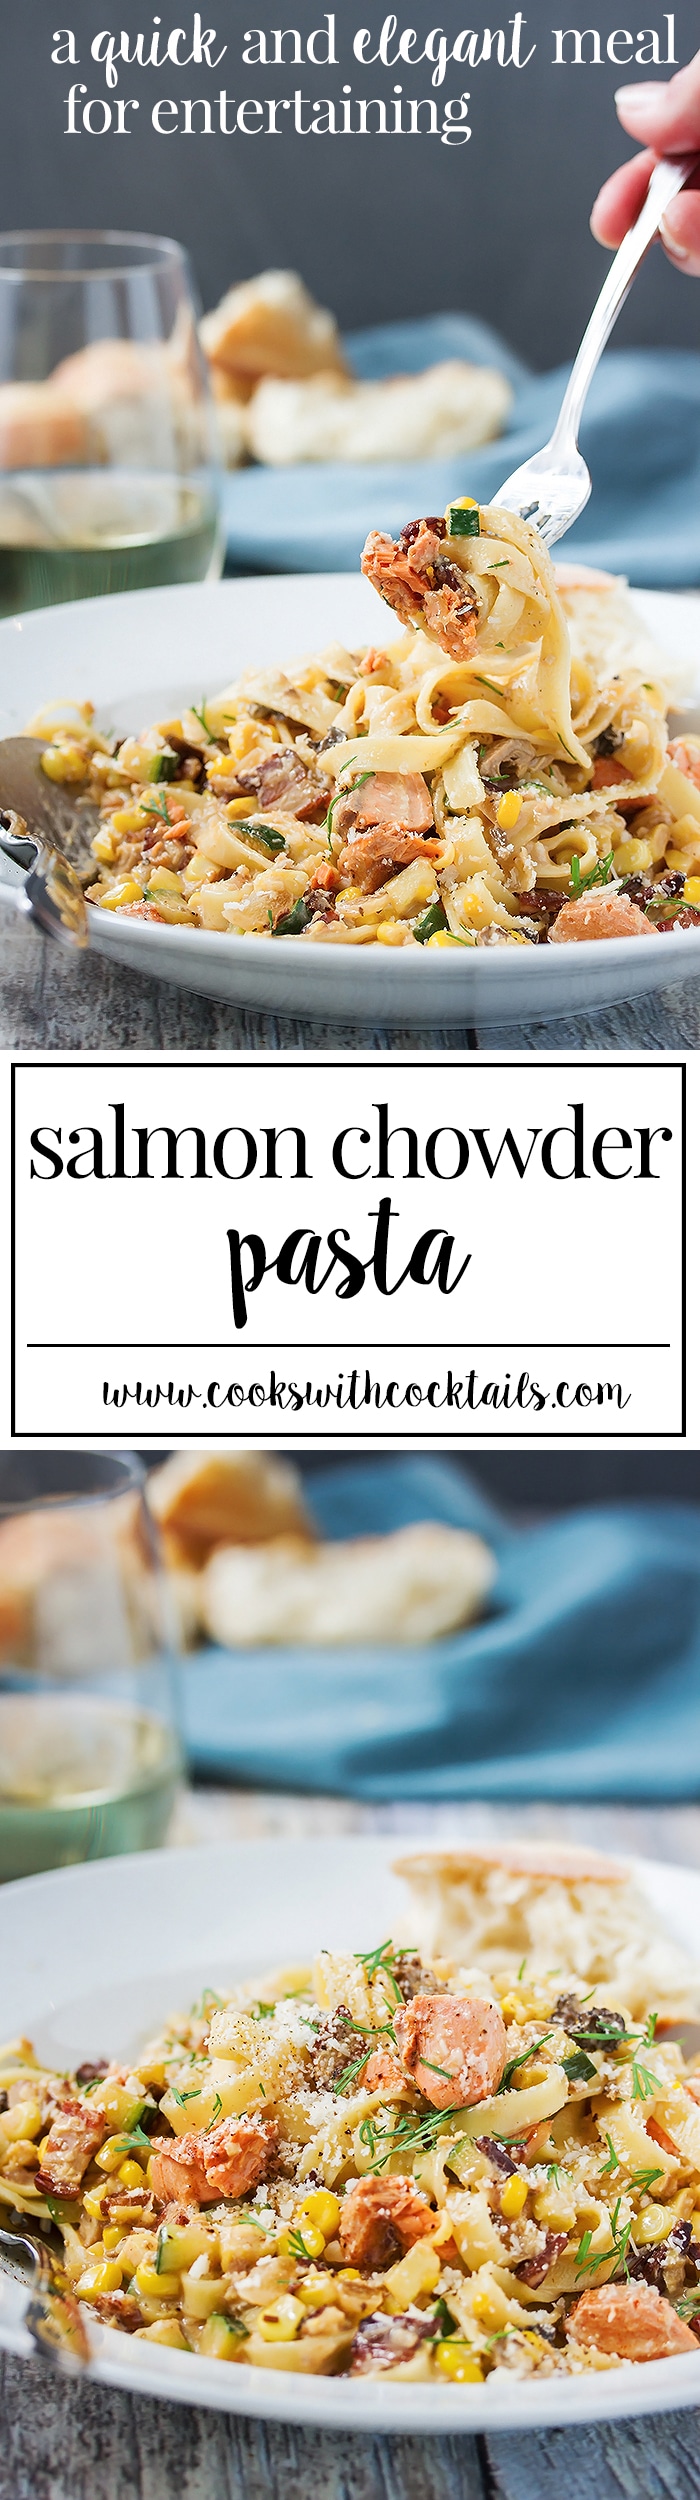 salmon-pasta-chowder-7